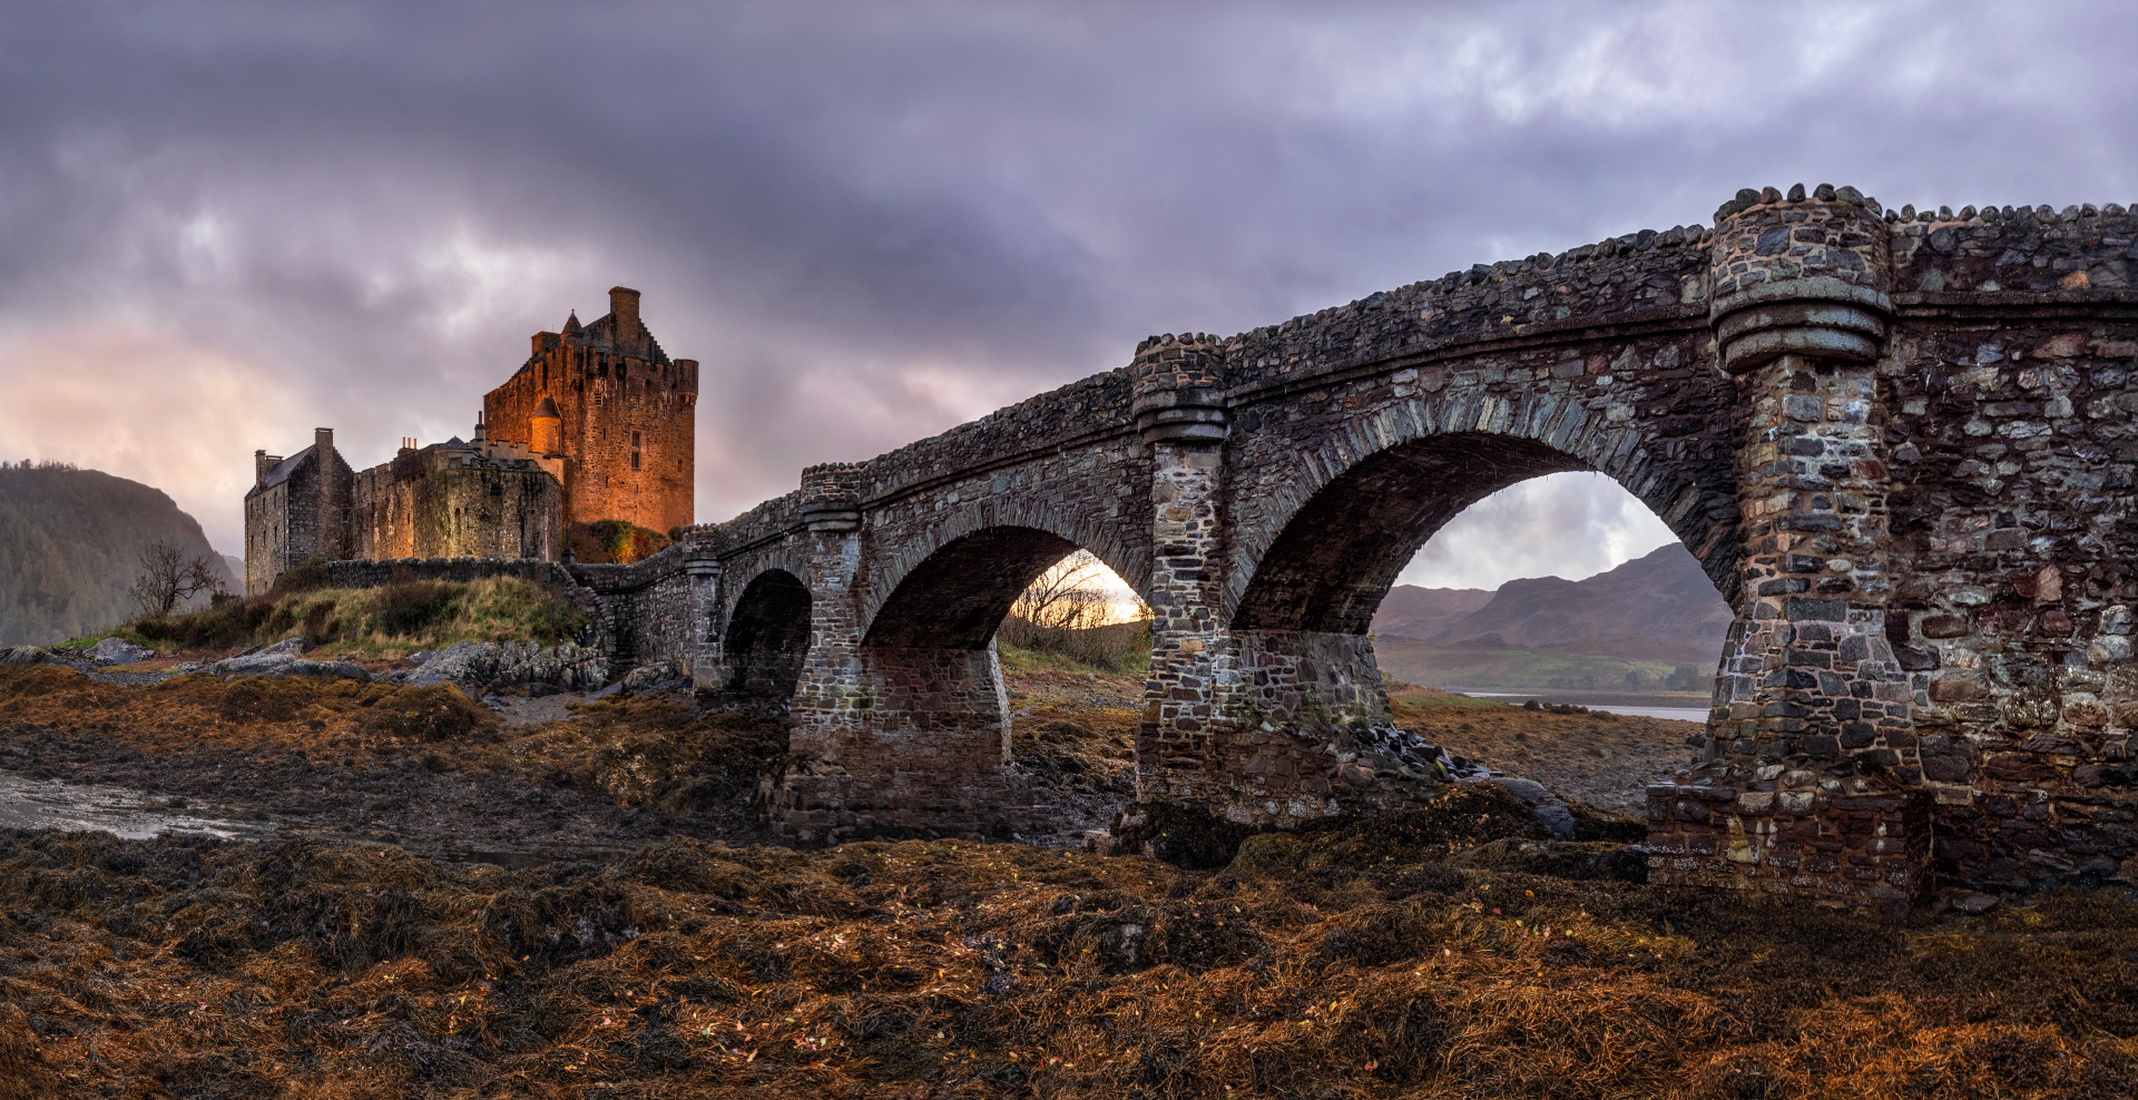 man made, eilean donan castle, bridge, castle, scotland, castles